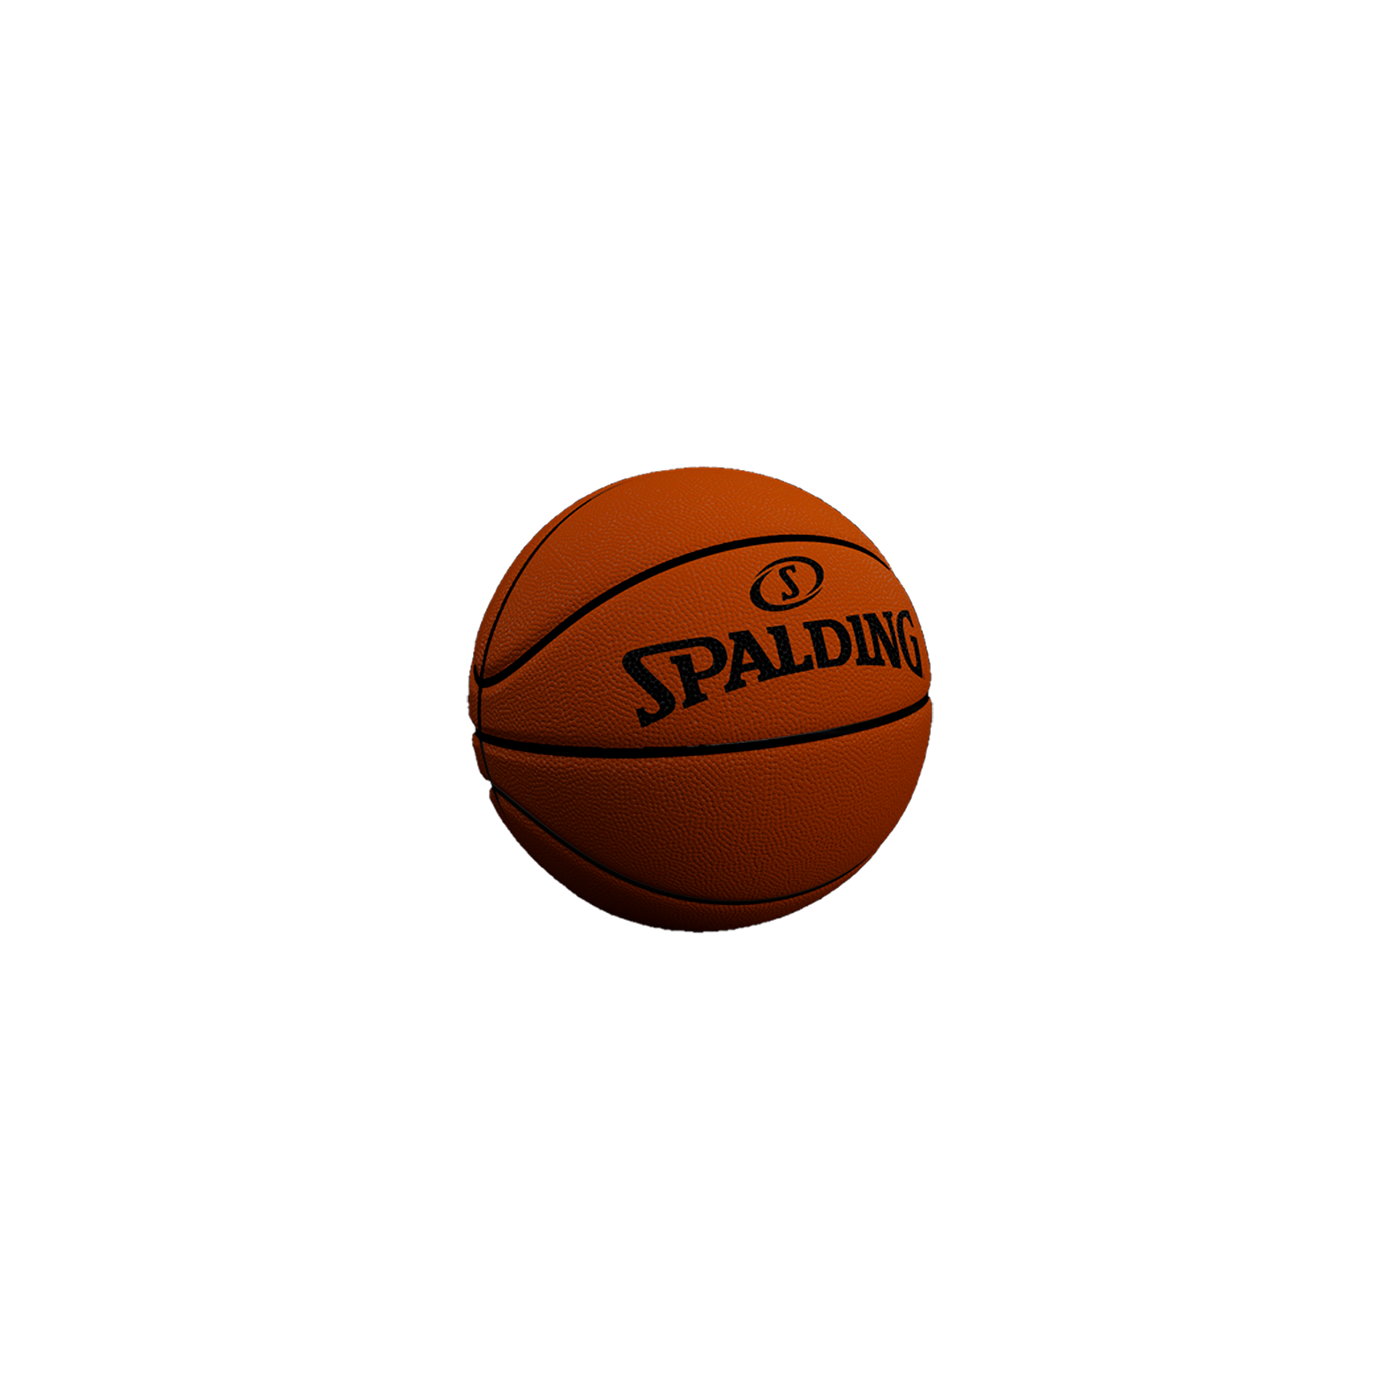 a basketball ball of Spalding